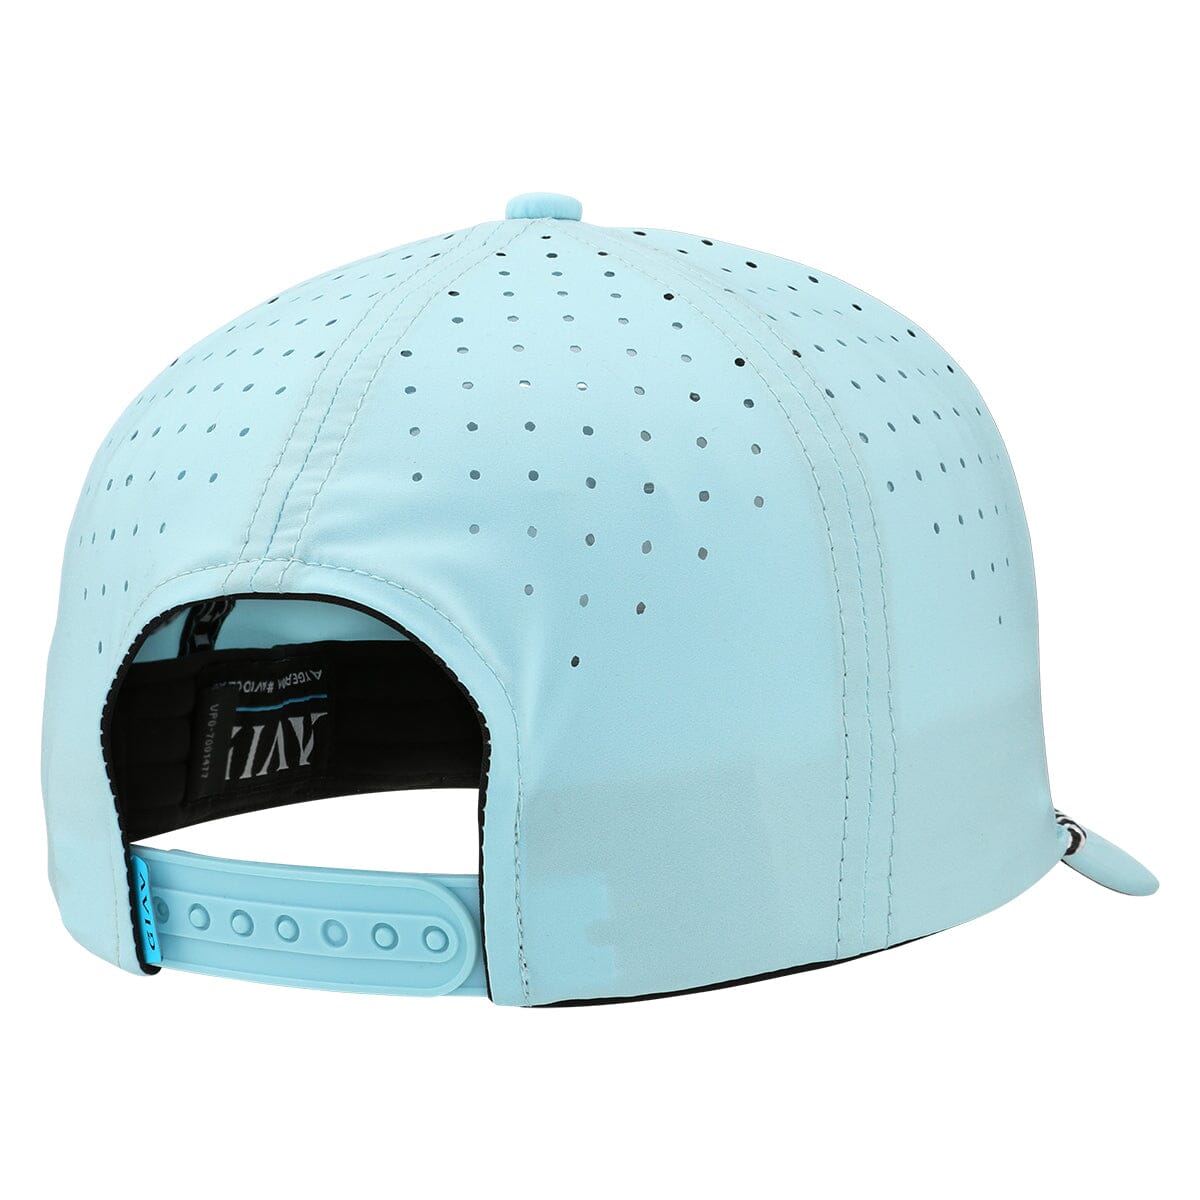 Ace Iconic Performance Hat – AVID Sportswear